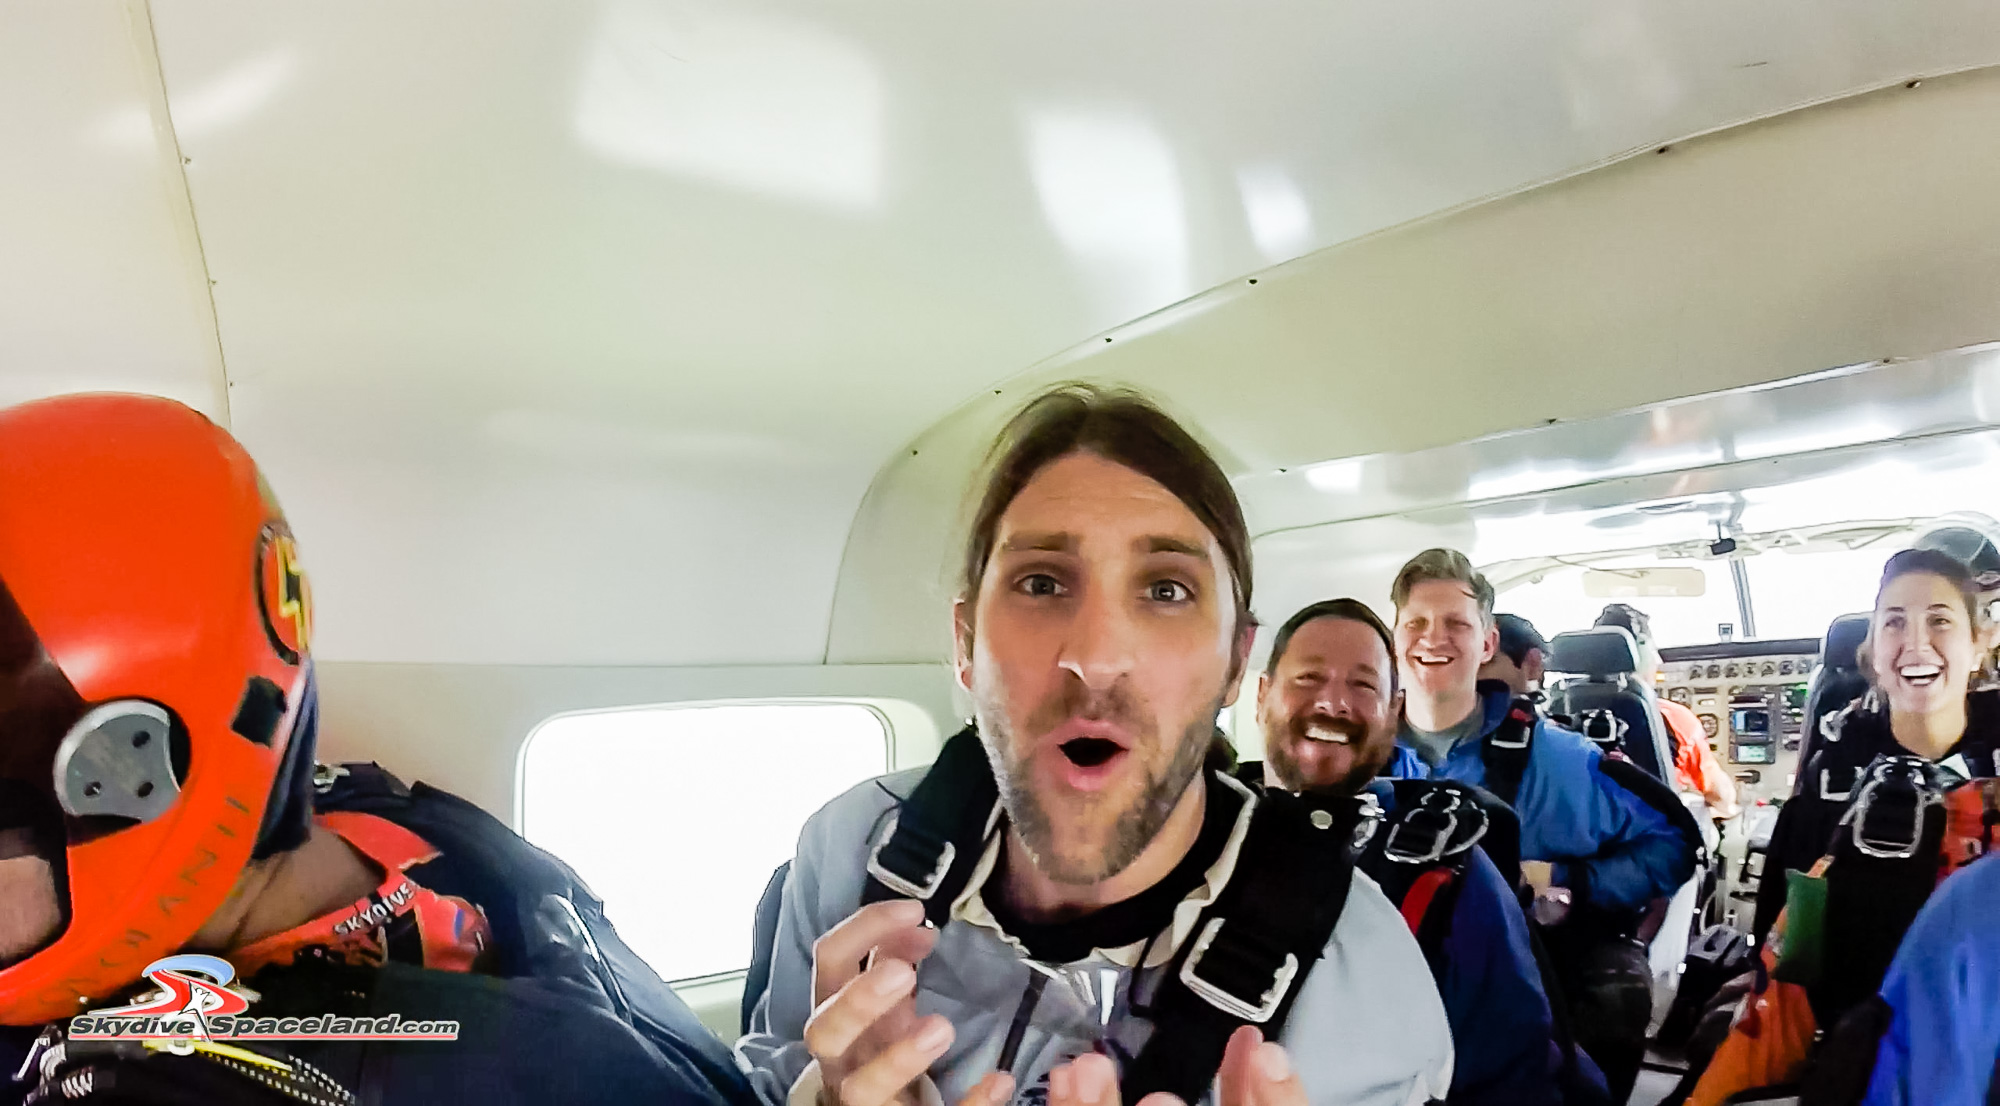 Skydiving Day-Video Screenshots-0010.jpg